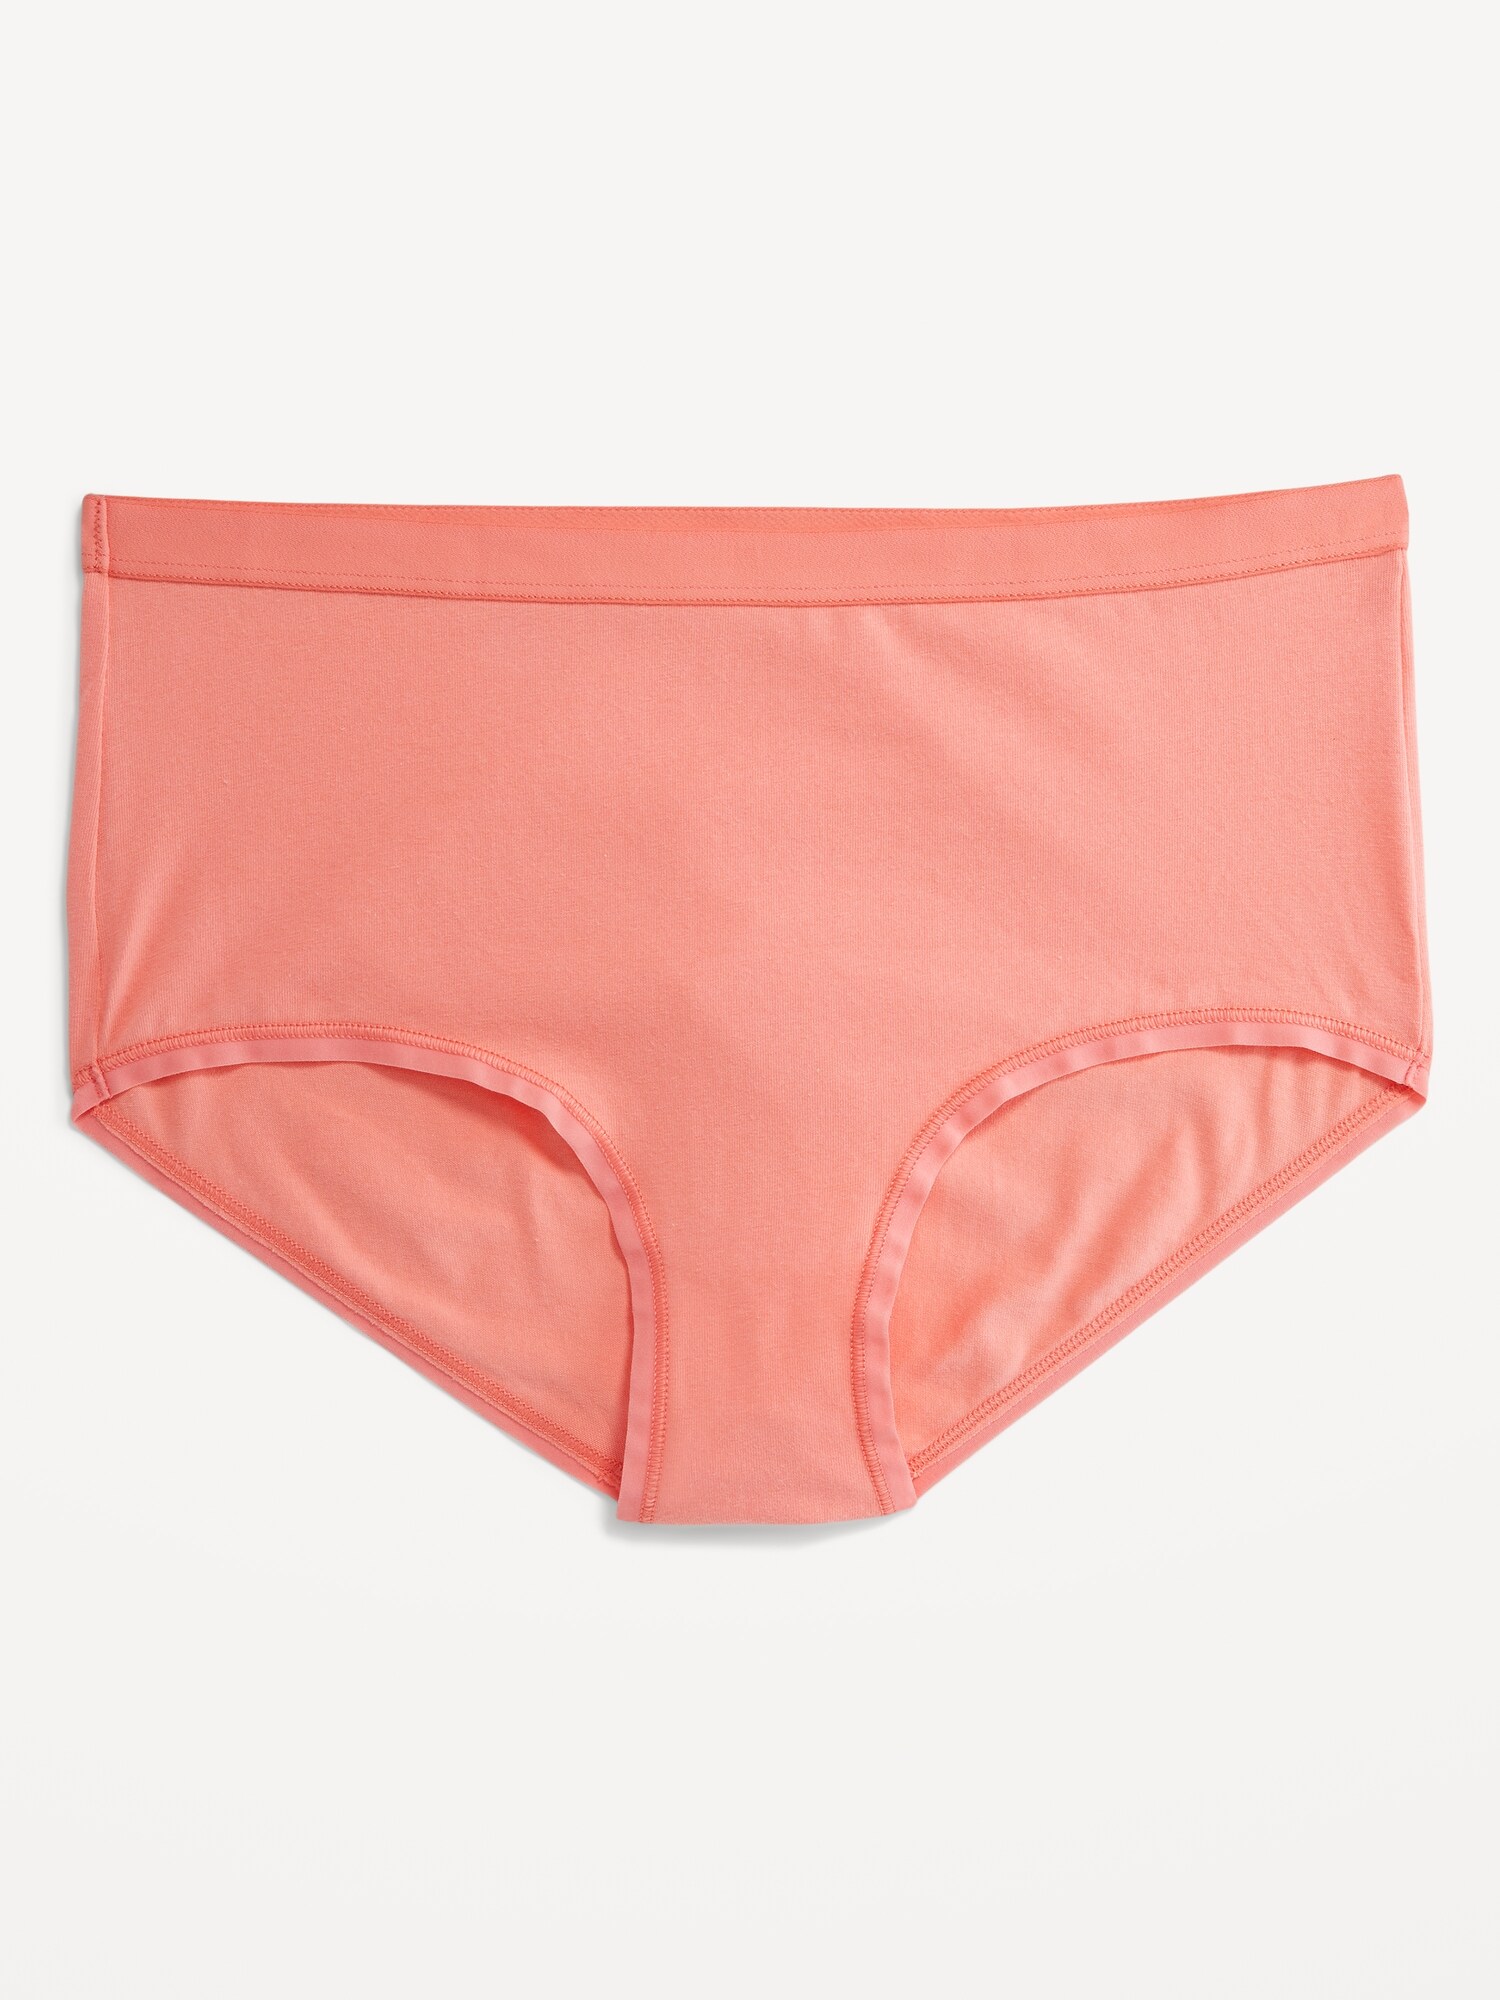 Linen panties, High waisted briefs, Organic lingerie, Menstrual underwear -  6XL/Dusty rose-Natural - Yahoo Shopping